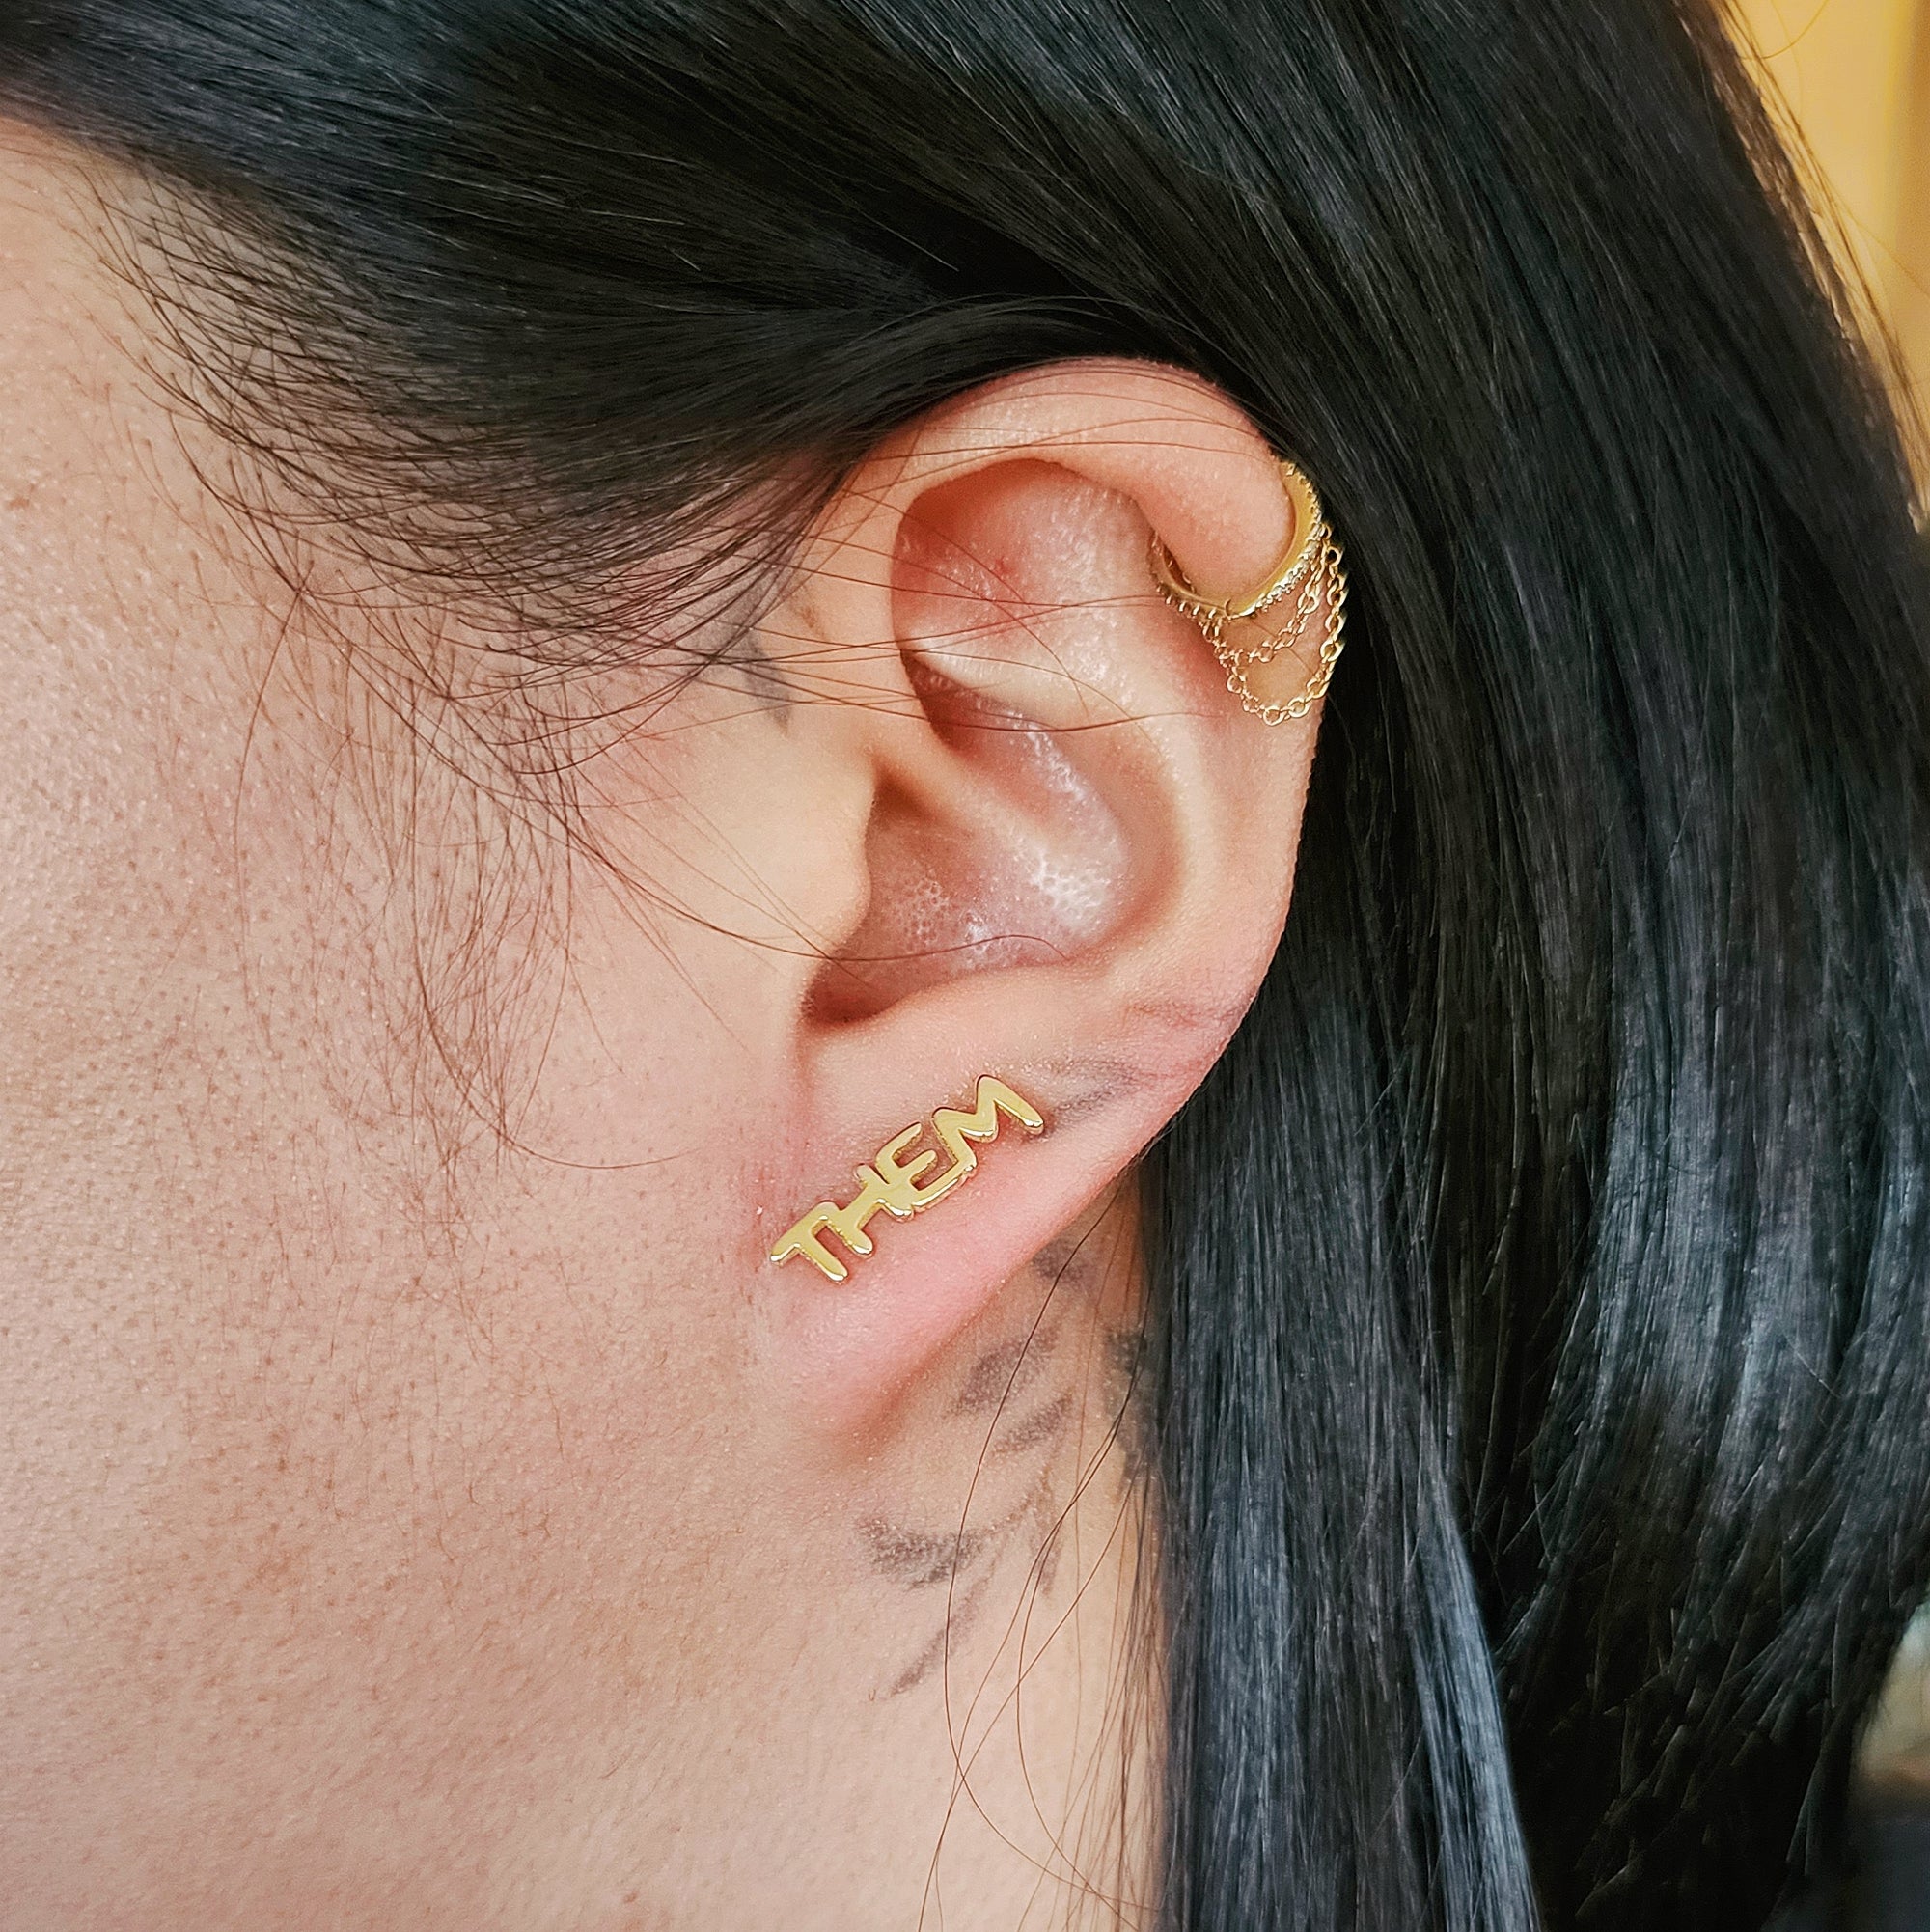 Gold Pronoun Stud Earrings - they/them